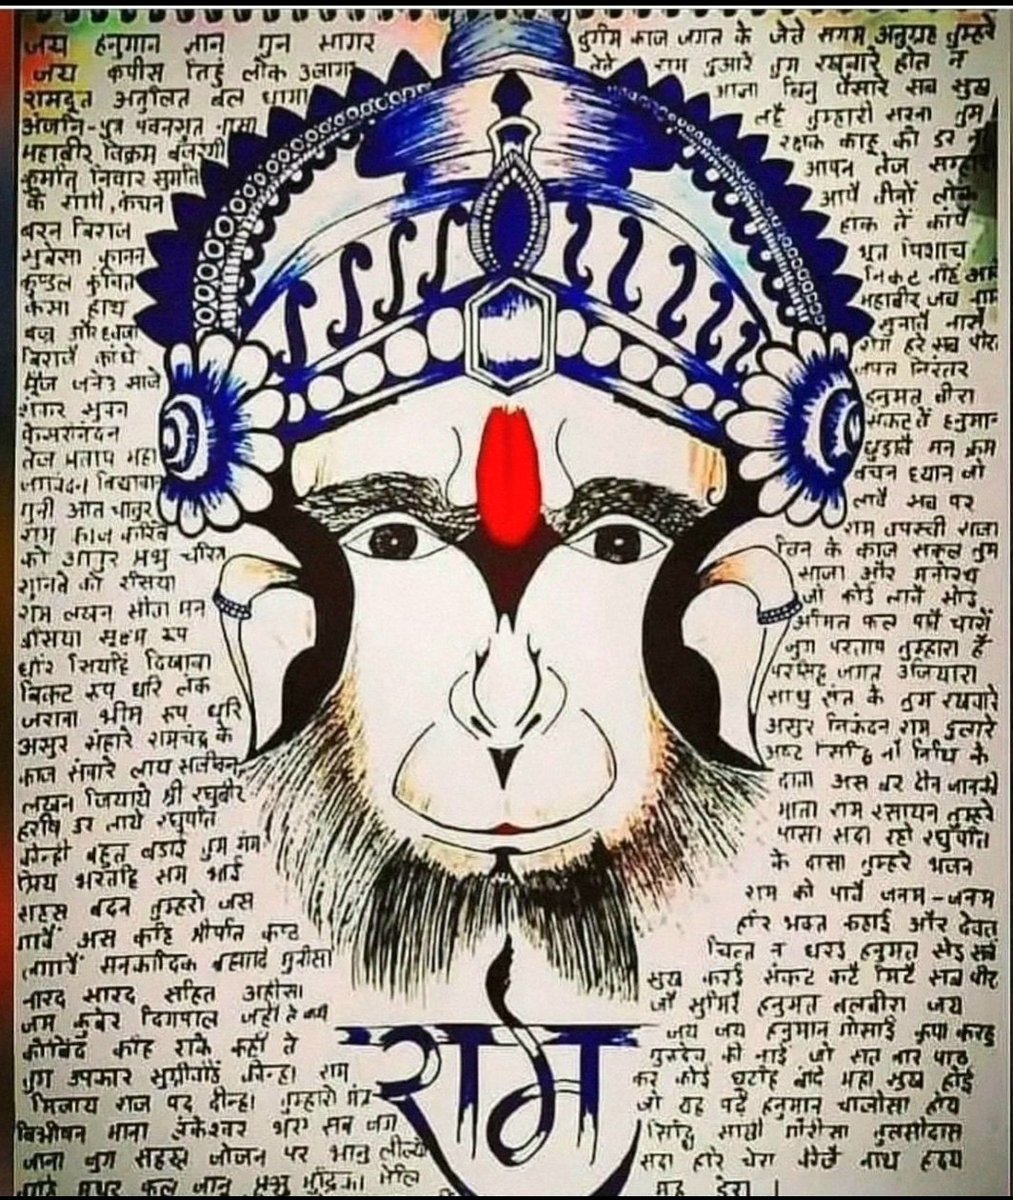 Whole Hanuman Chalisa written here Jai Shri Ram 🙏🚩